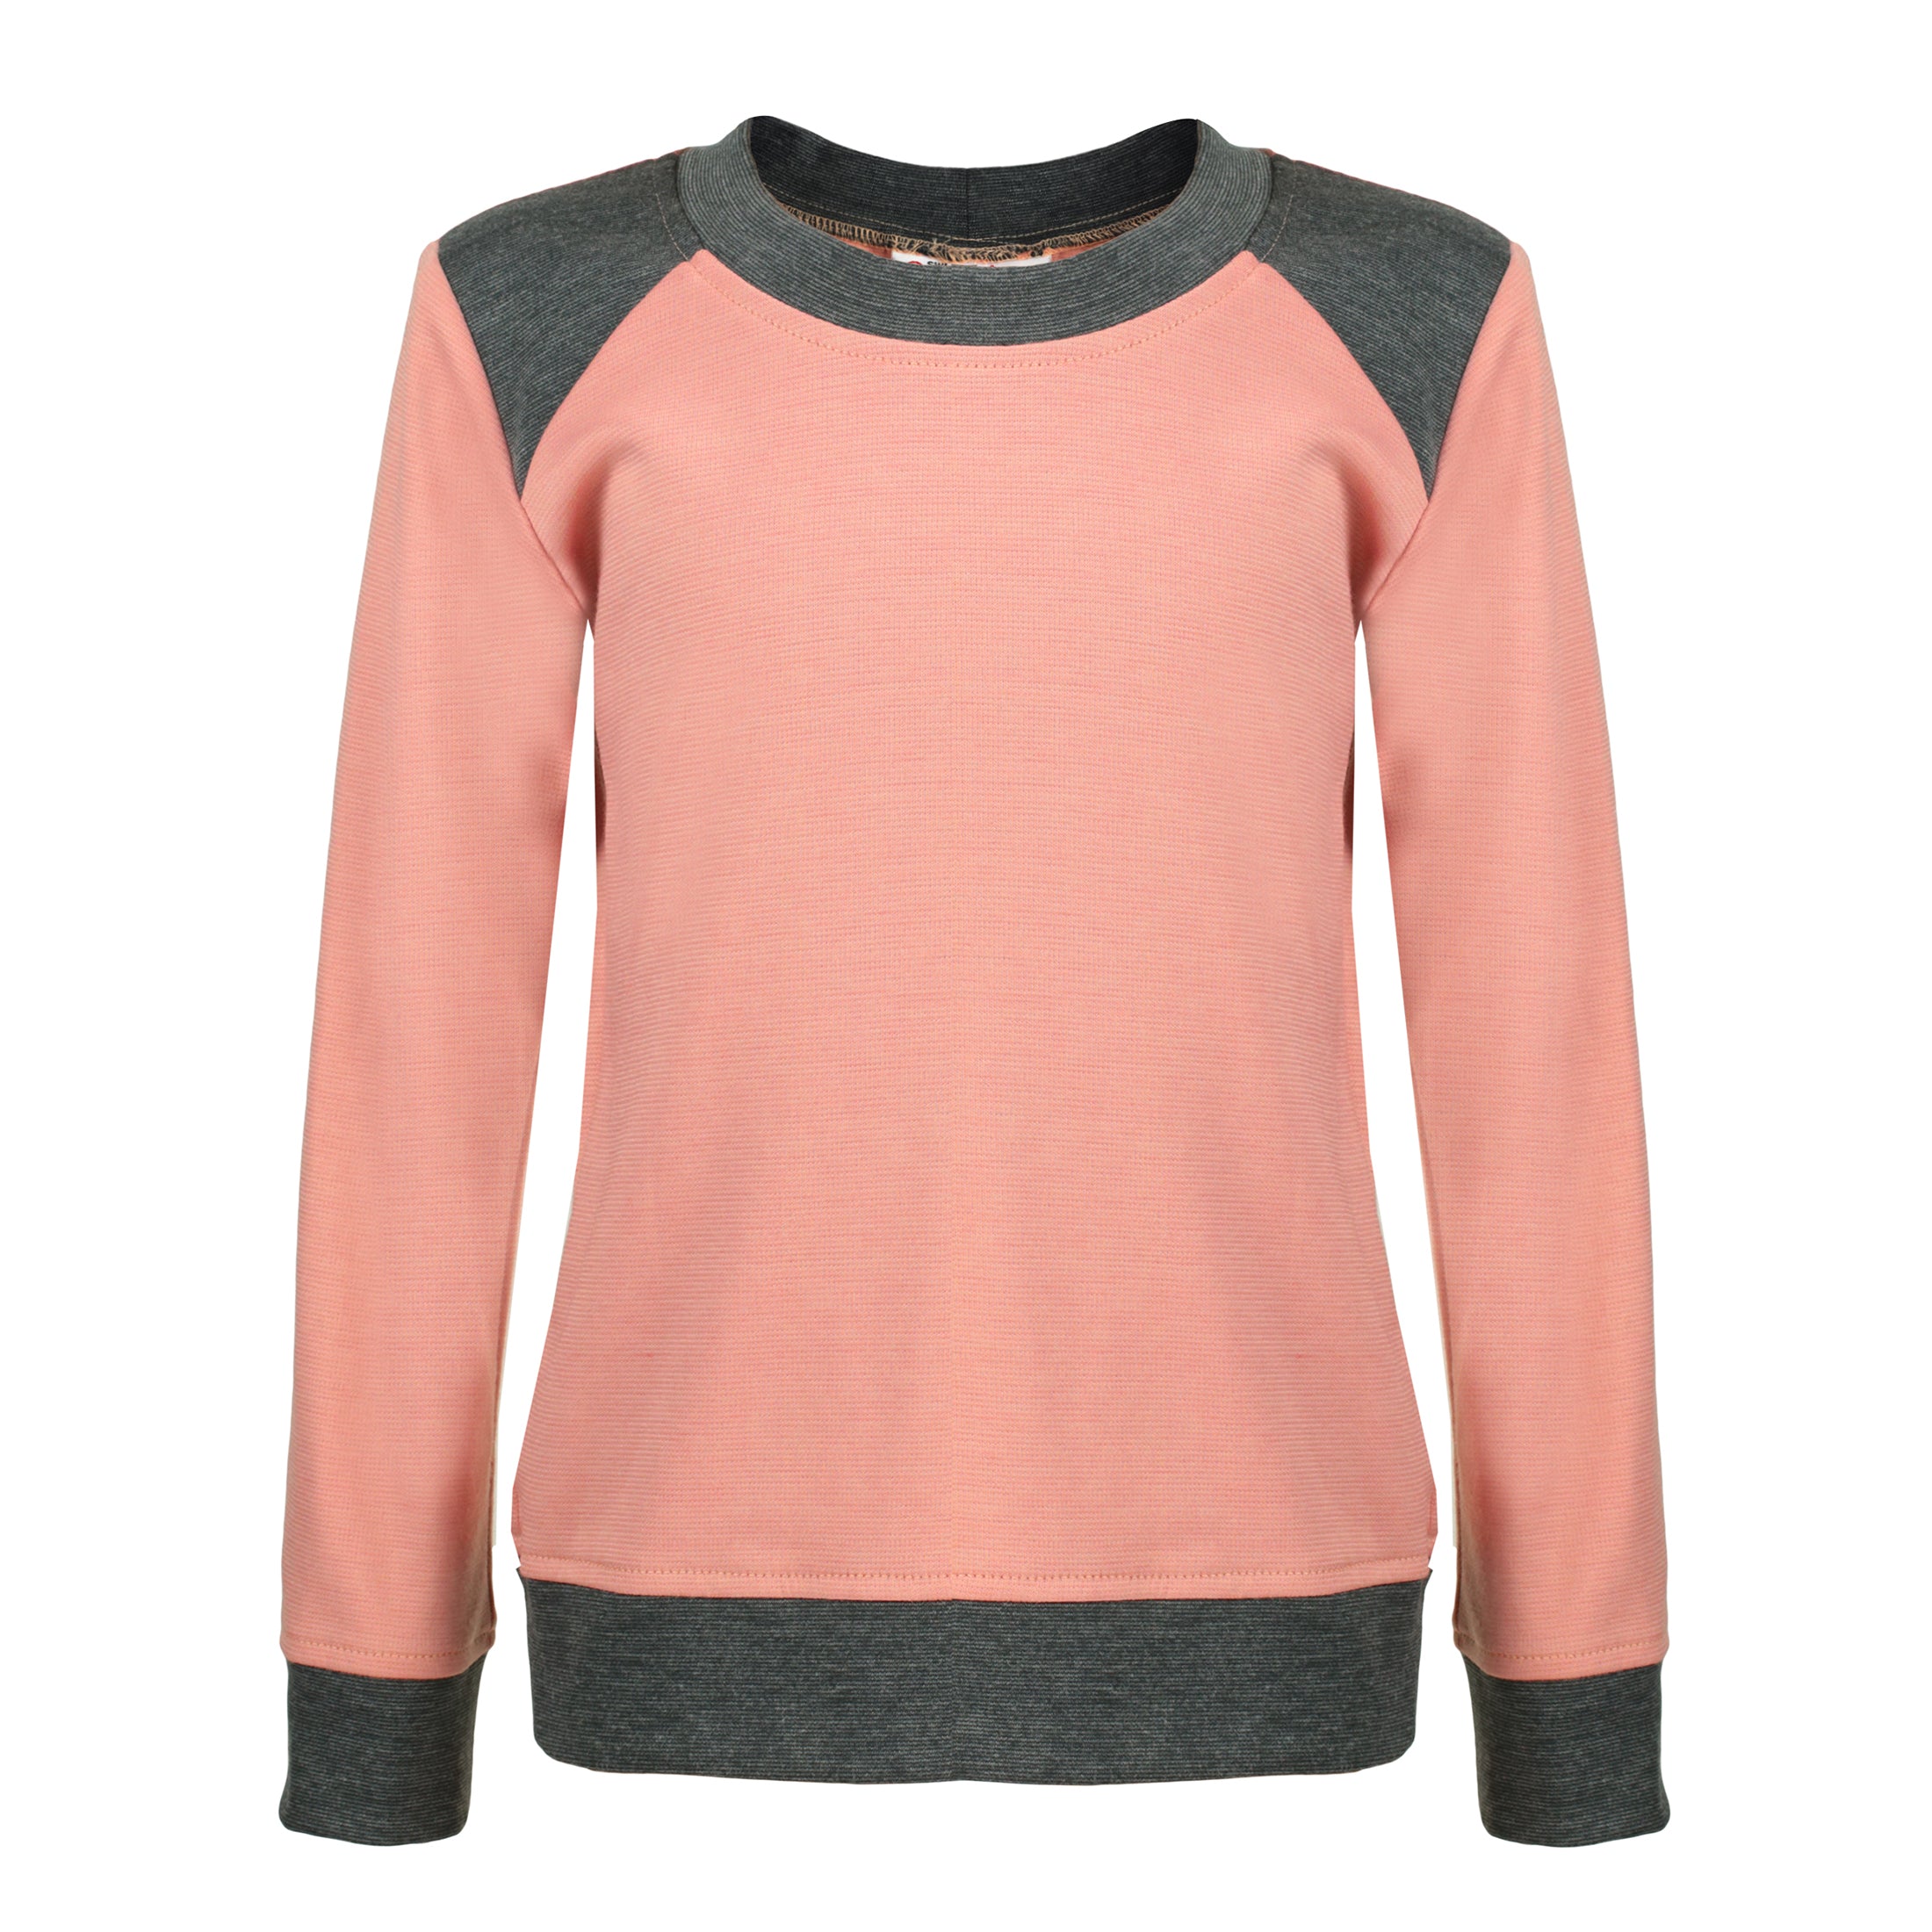 Pink and Gray Long Sleeve Shirt